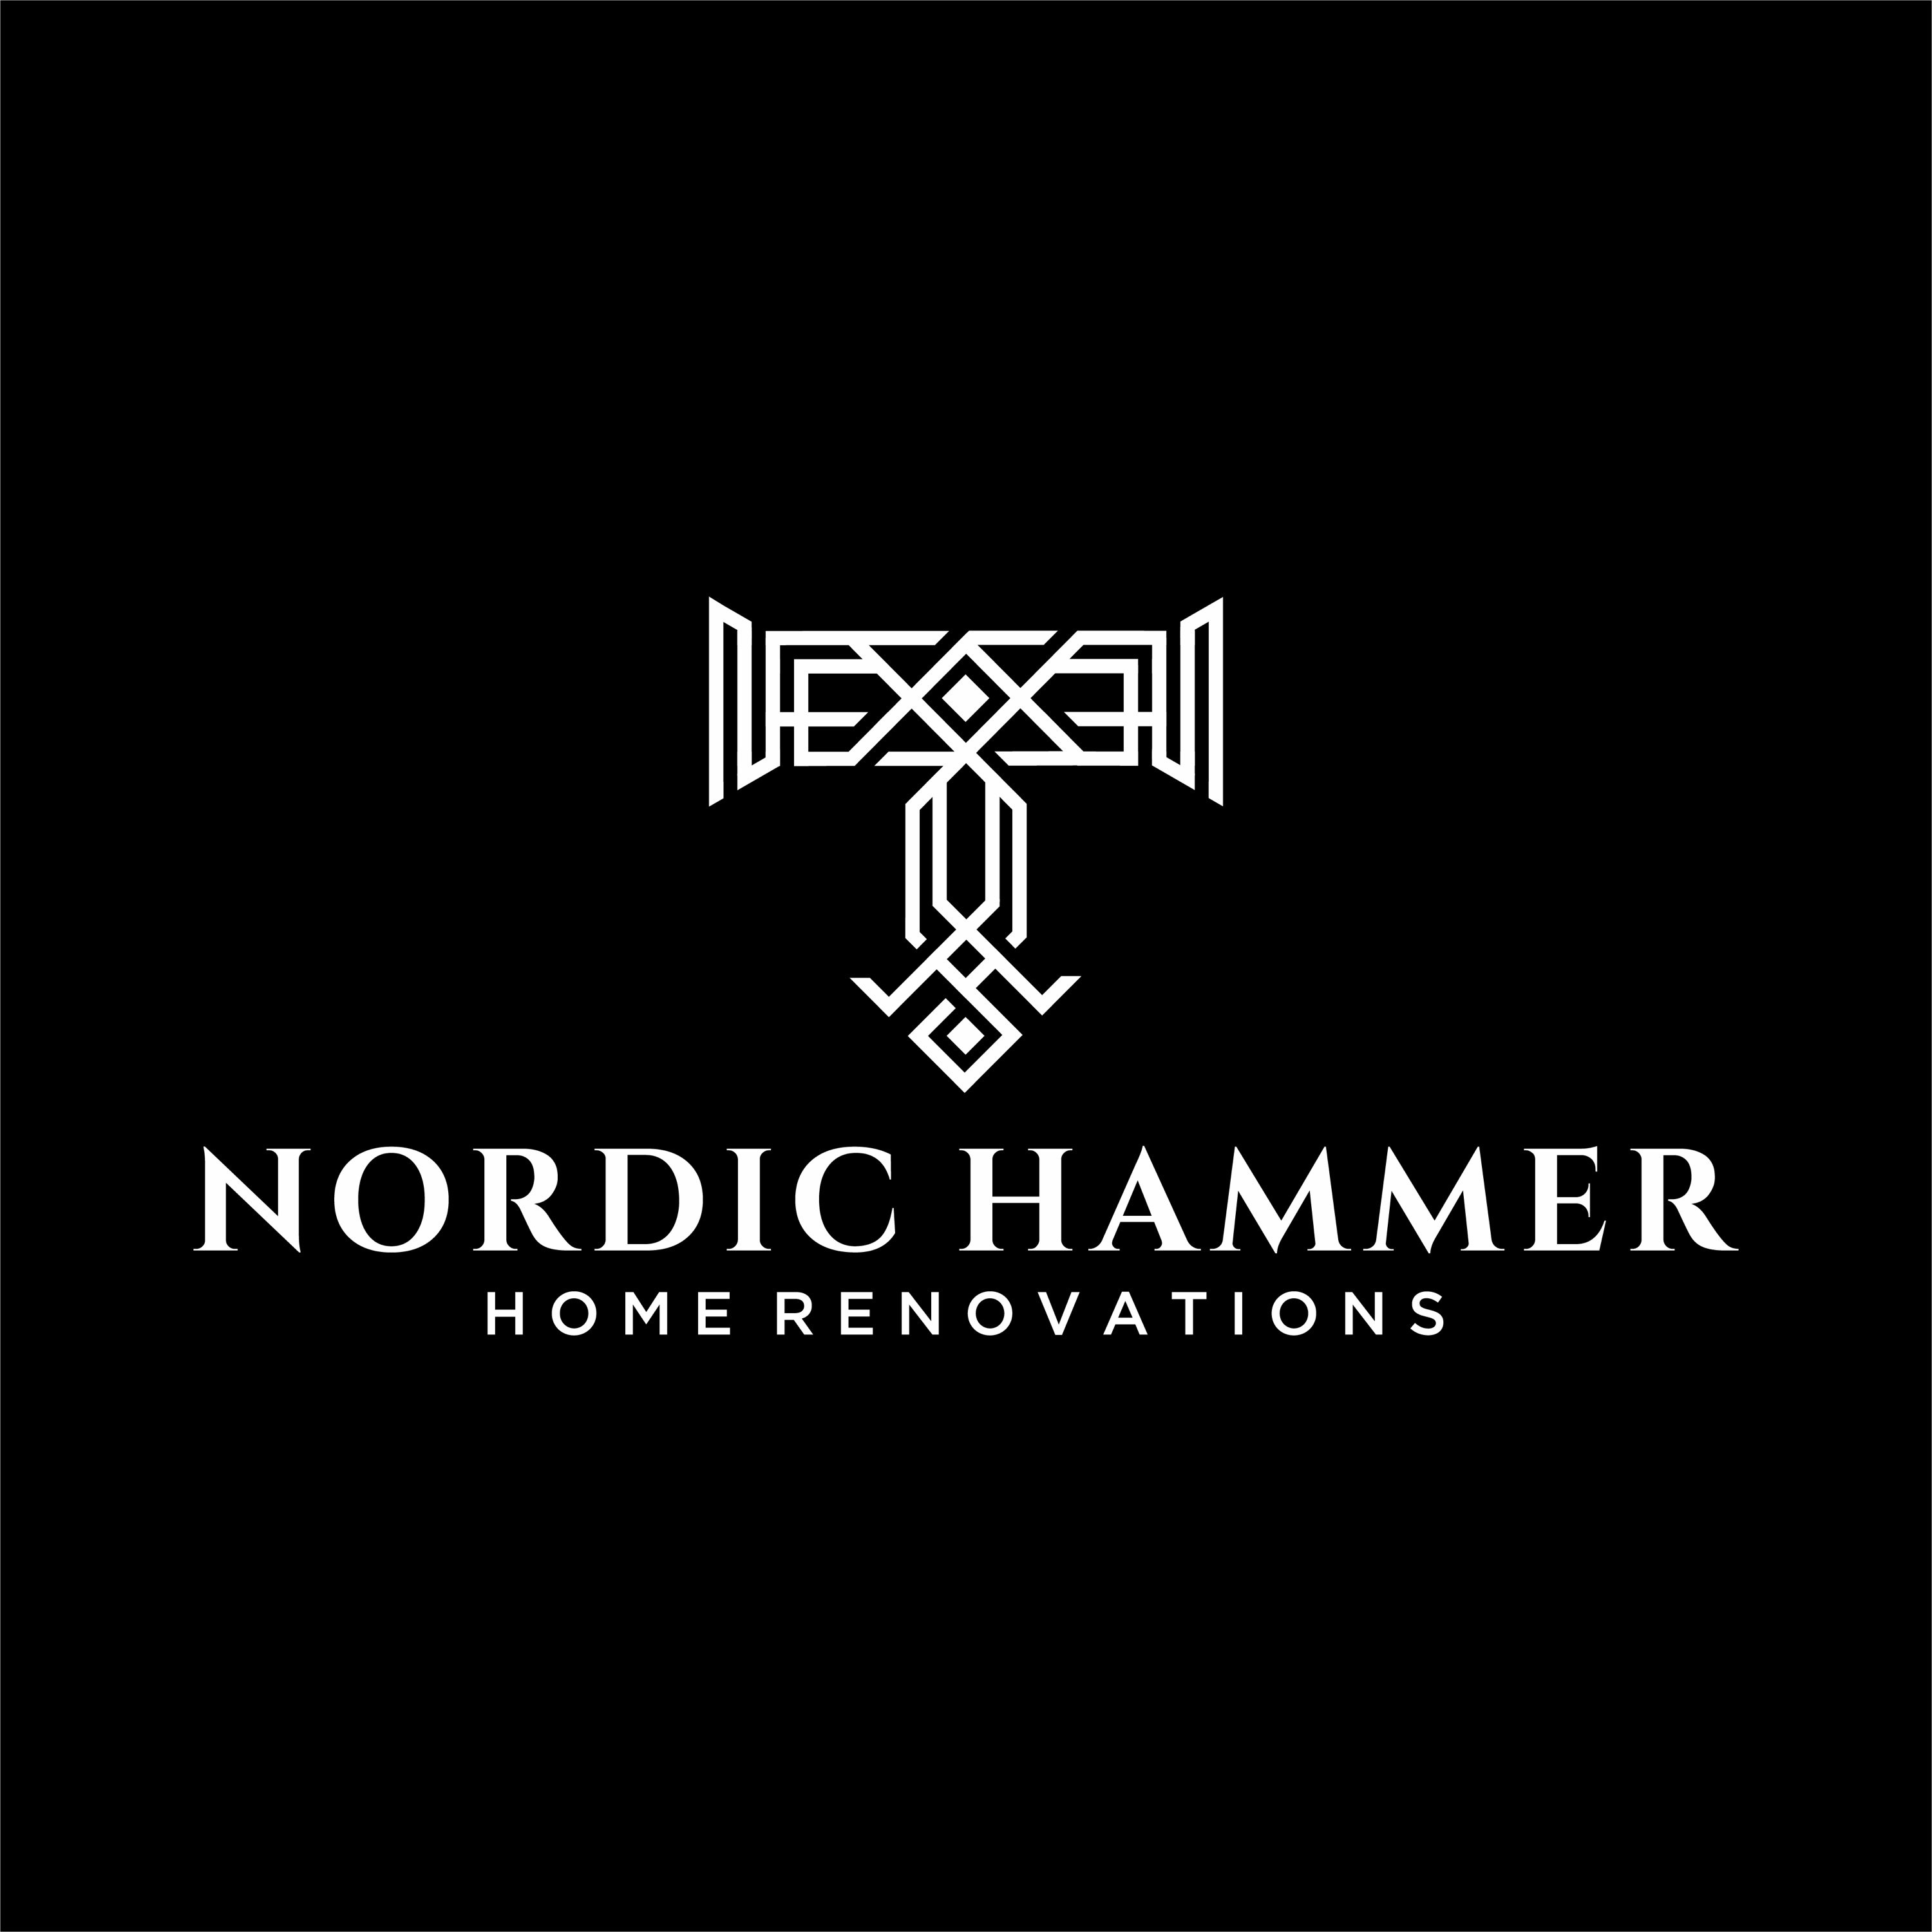 Nordic Hammer Home Renovations Logo